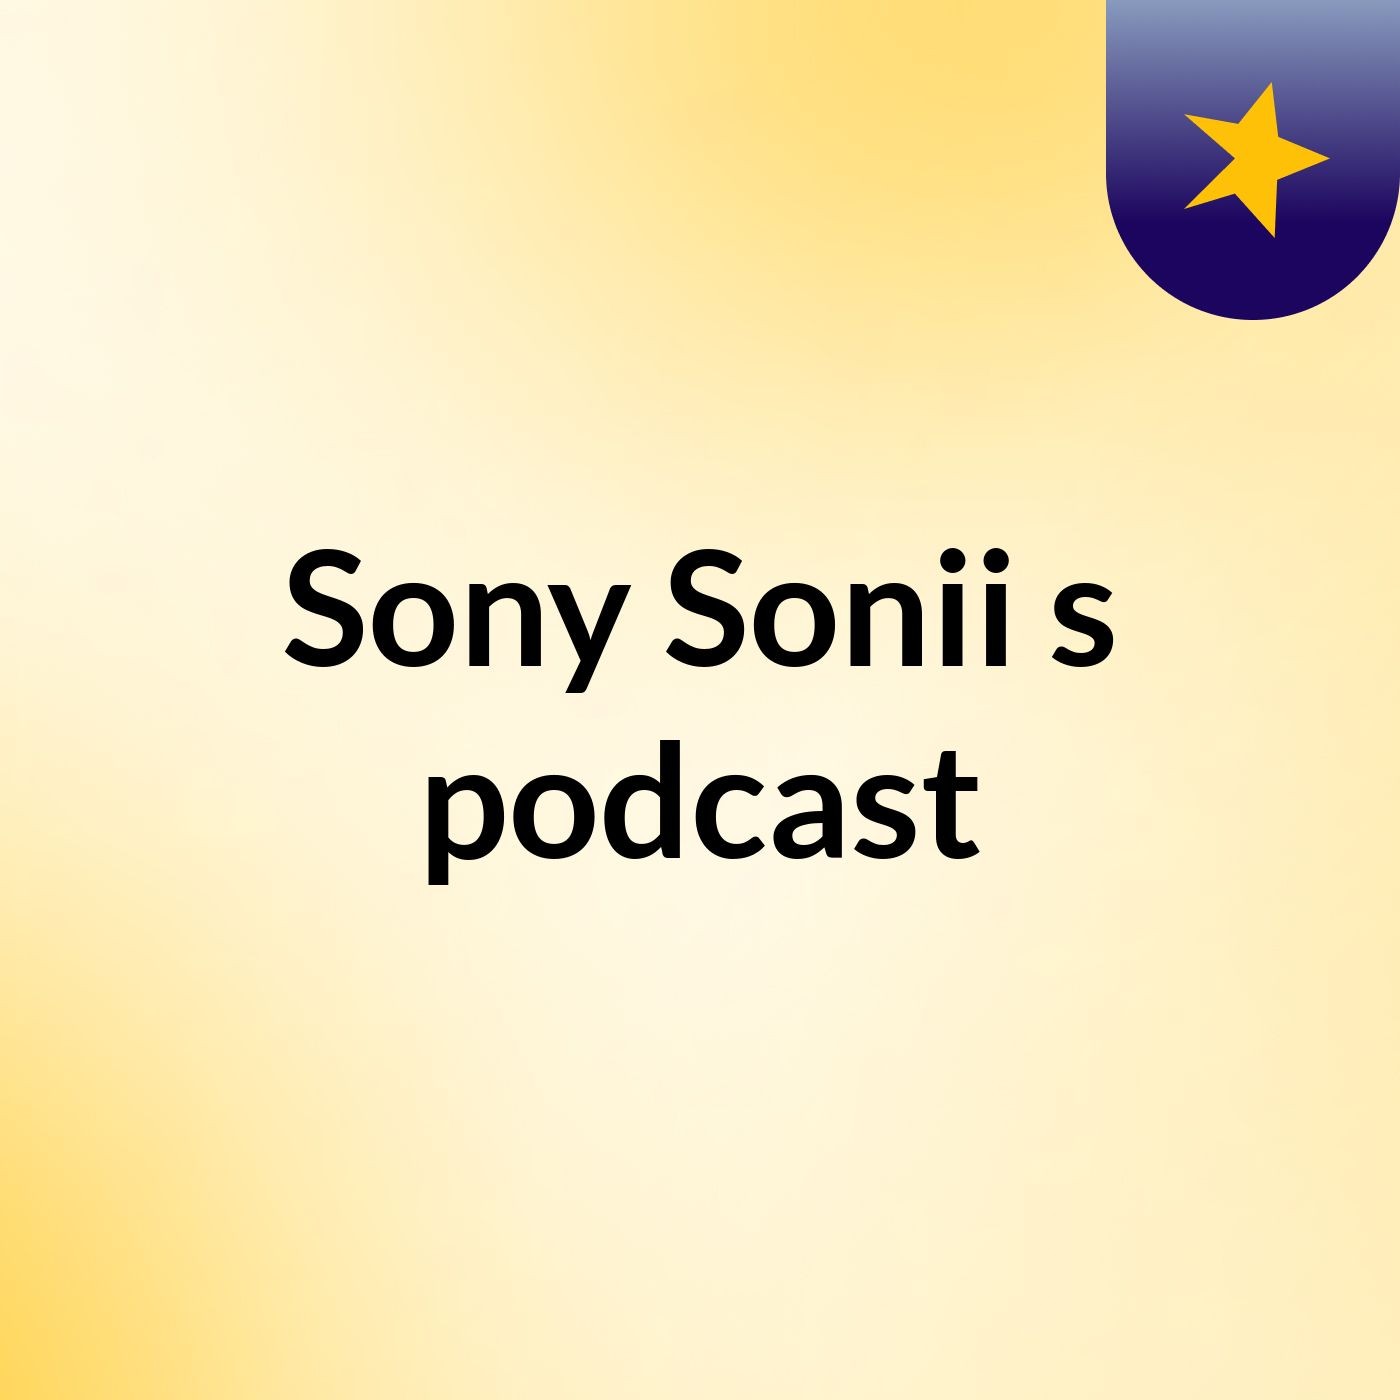 Sony Sonii's podcast